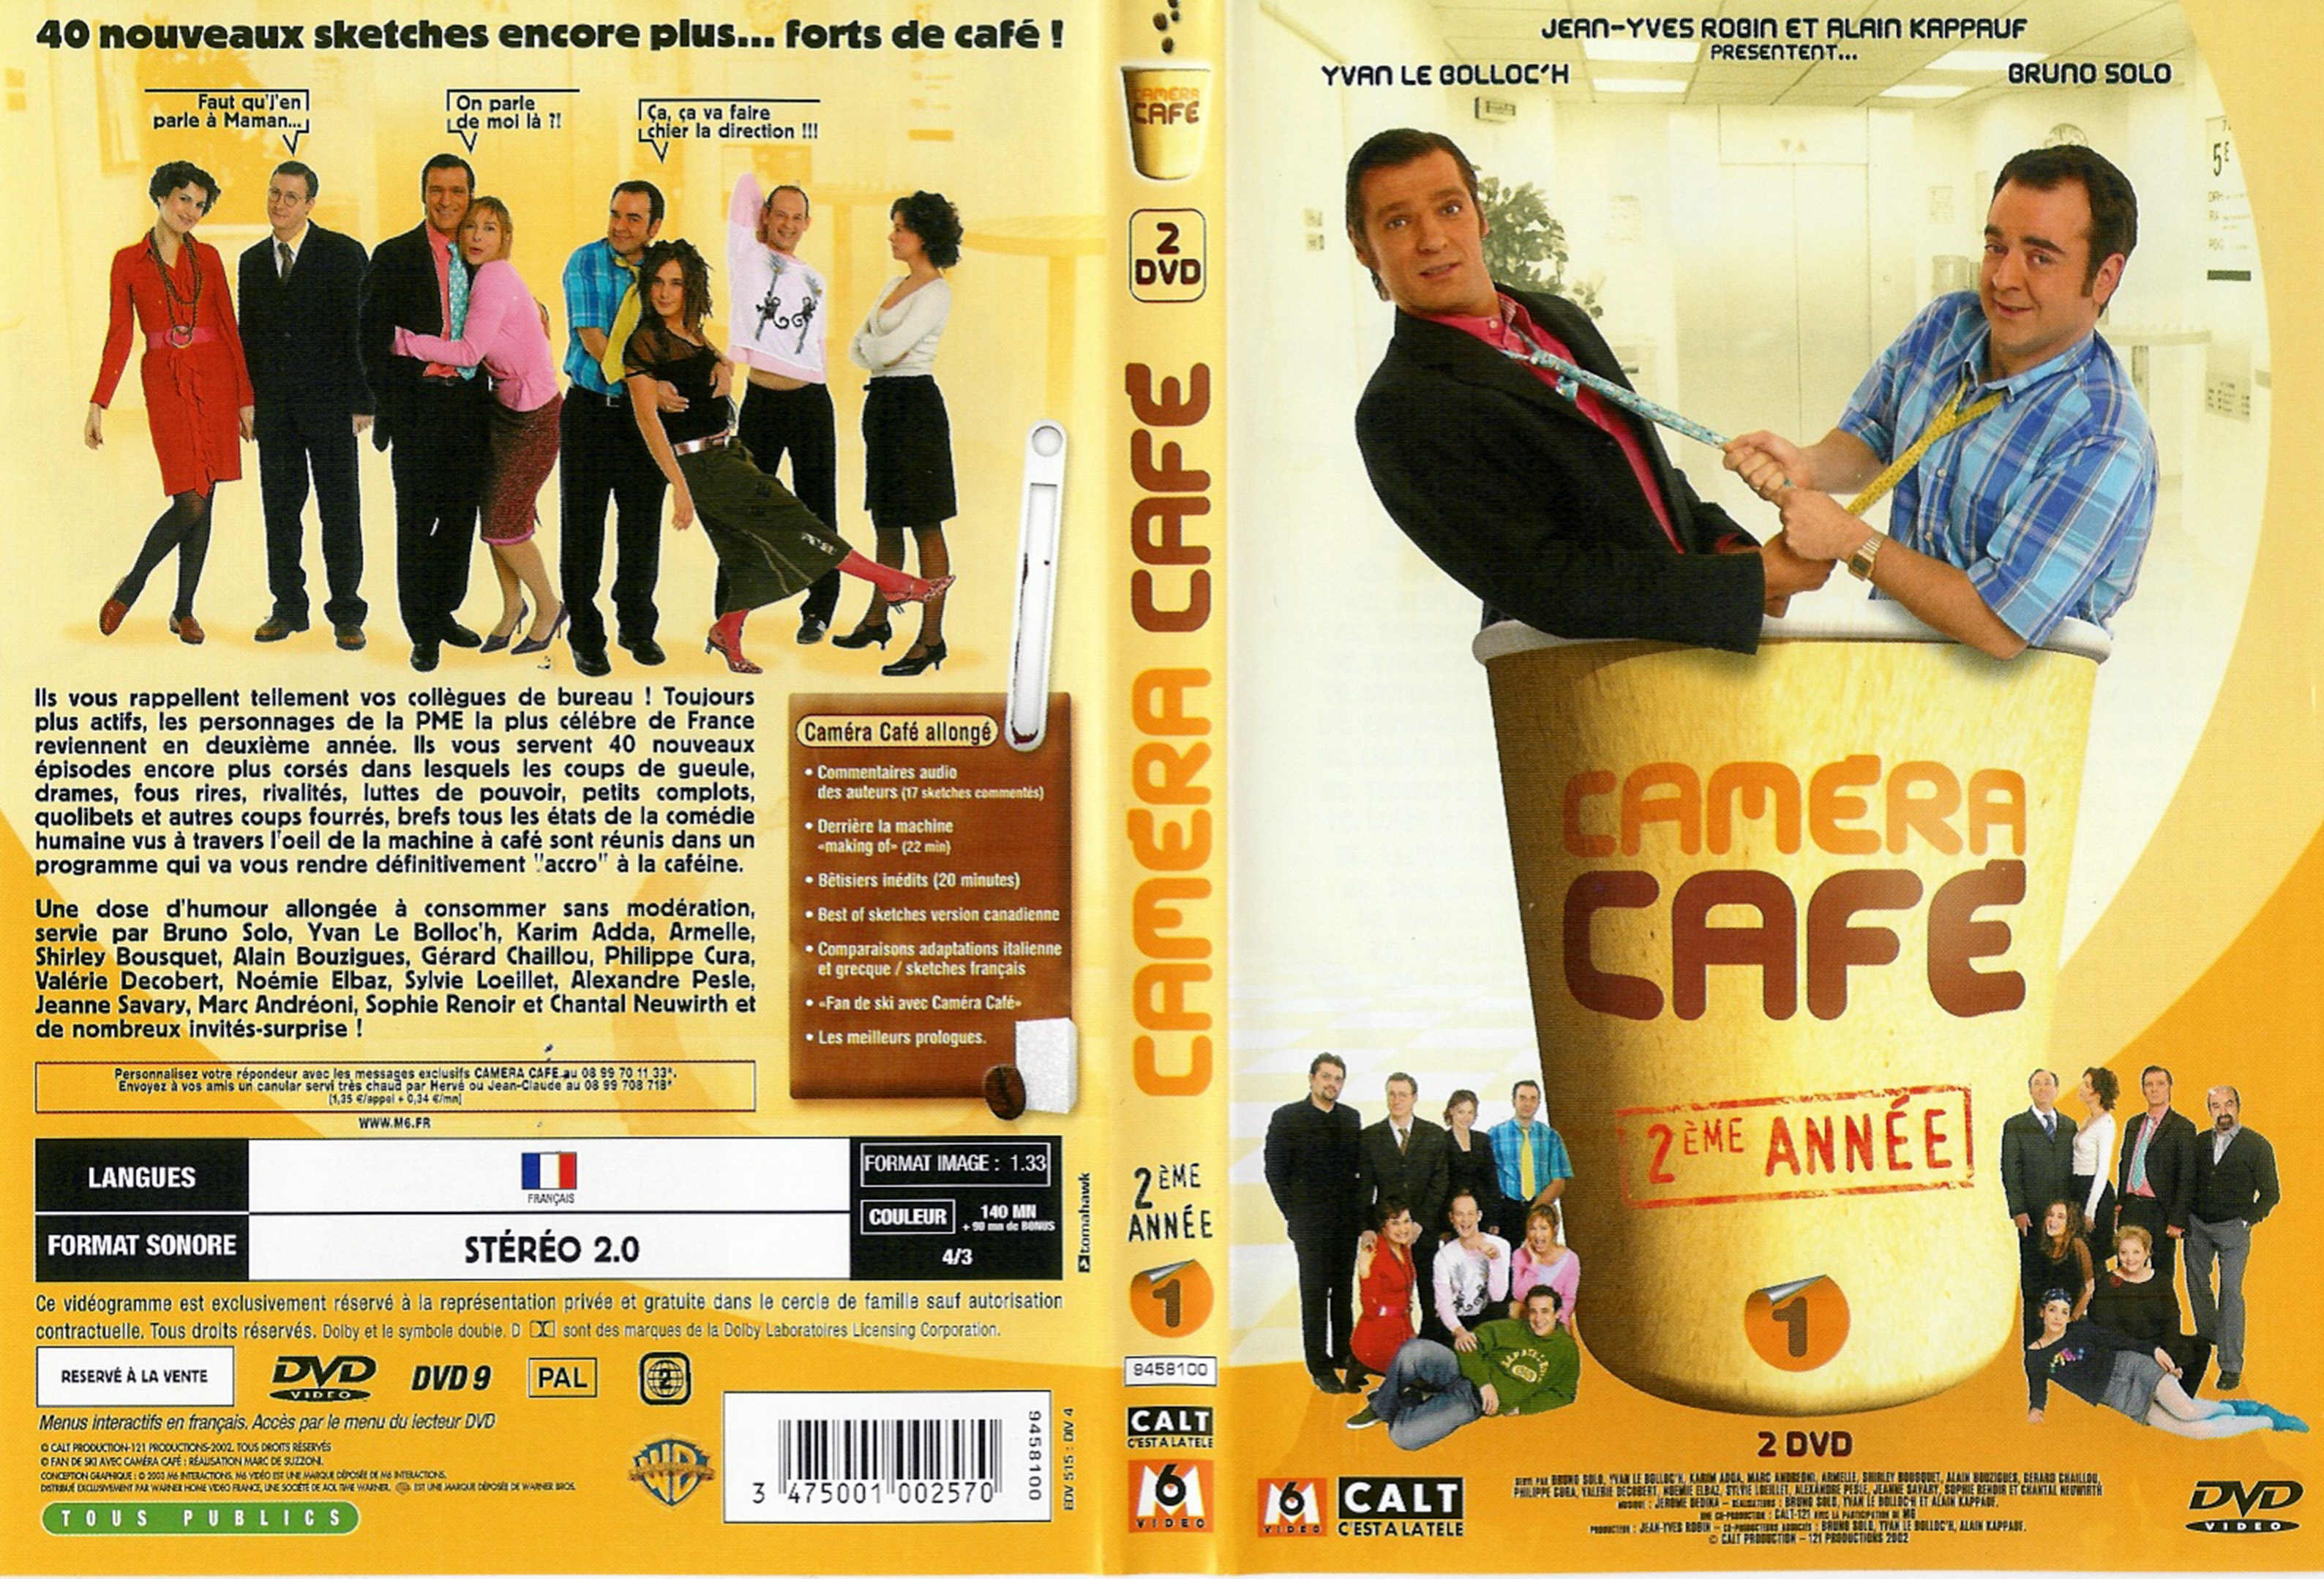 Jaquette DVD Camera cafe saison 2 vol 1